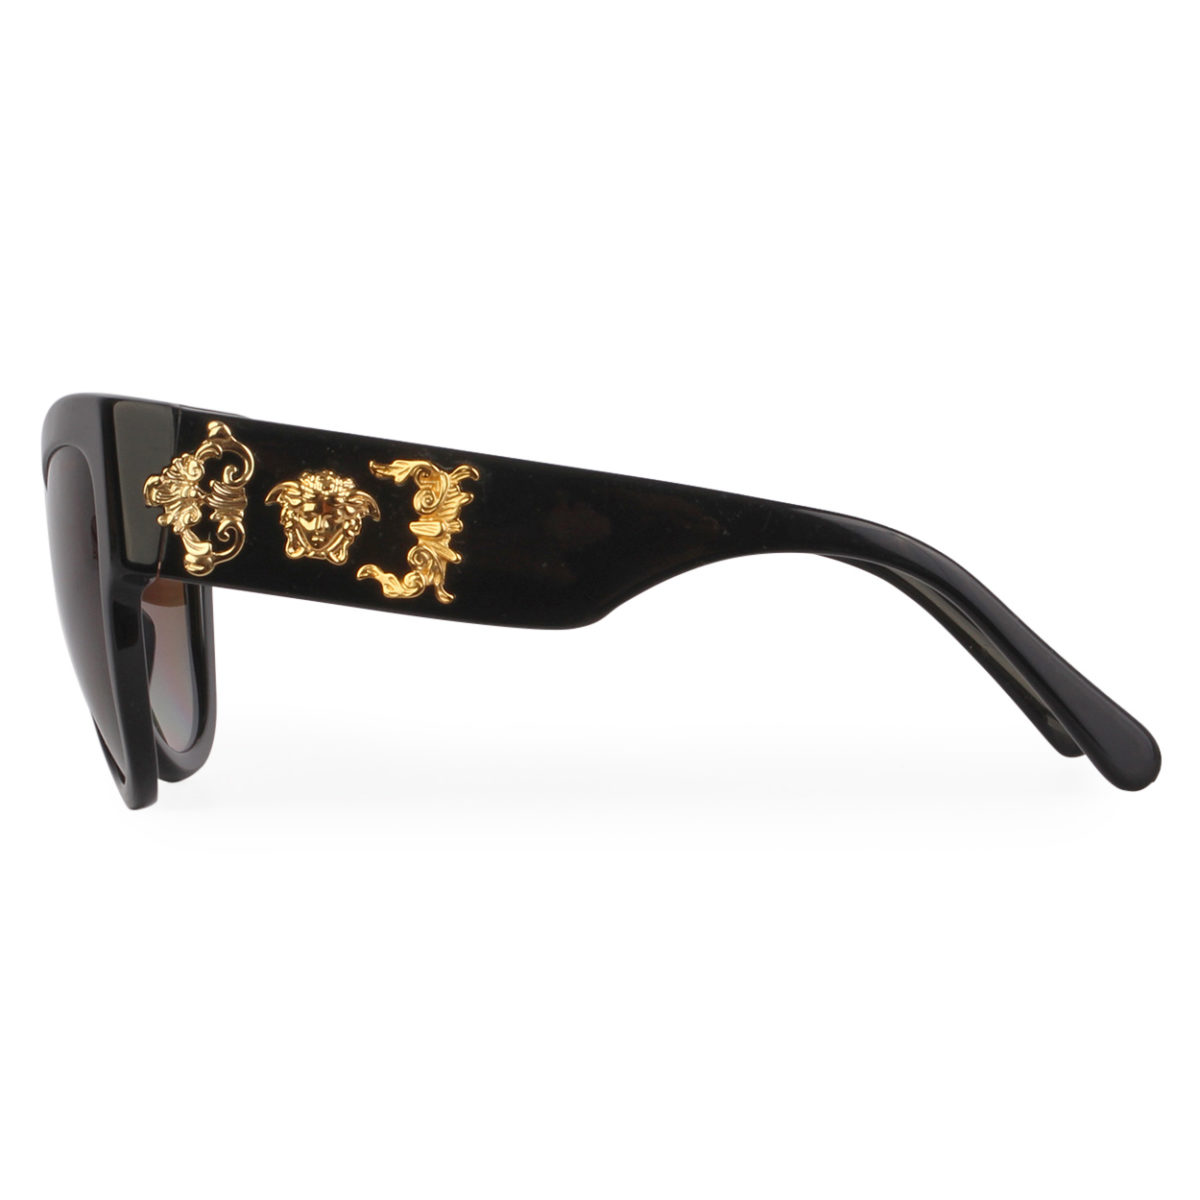 versace 4322 sunglasses